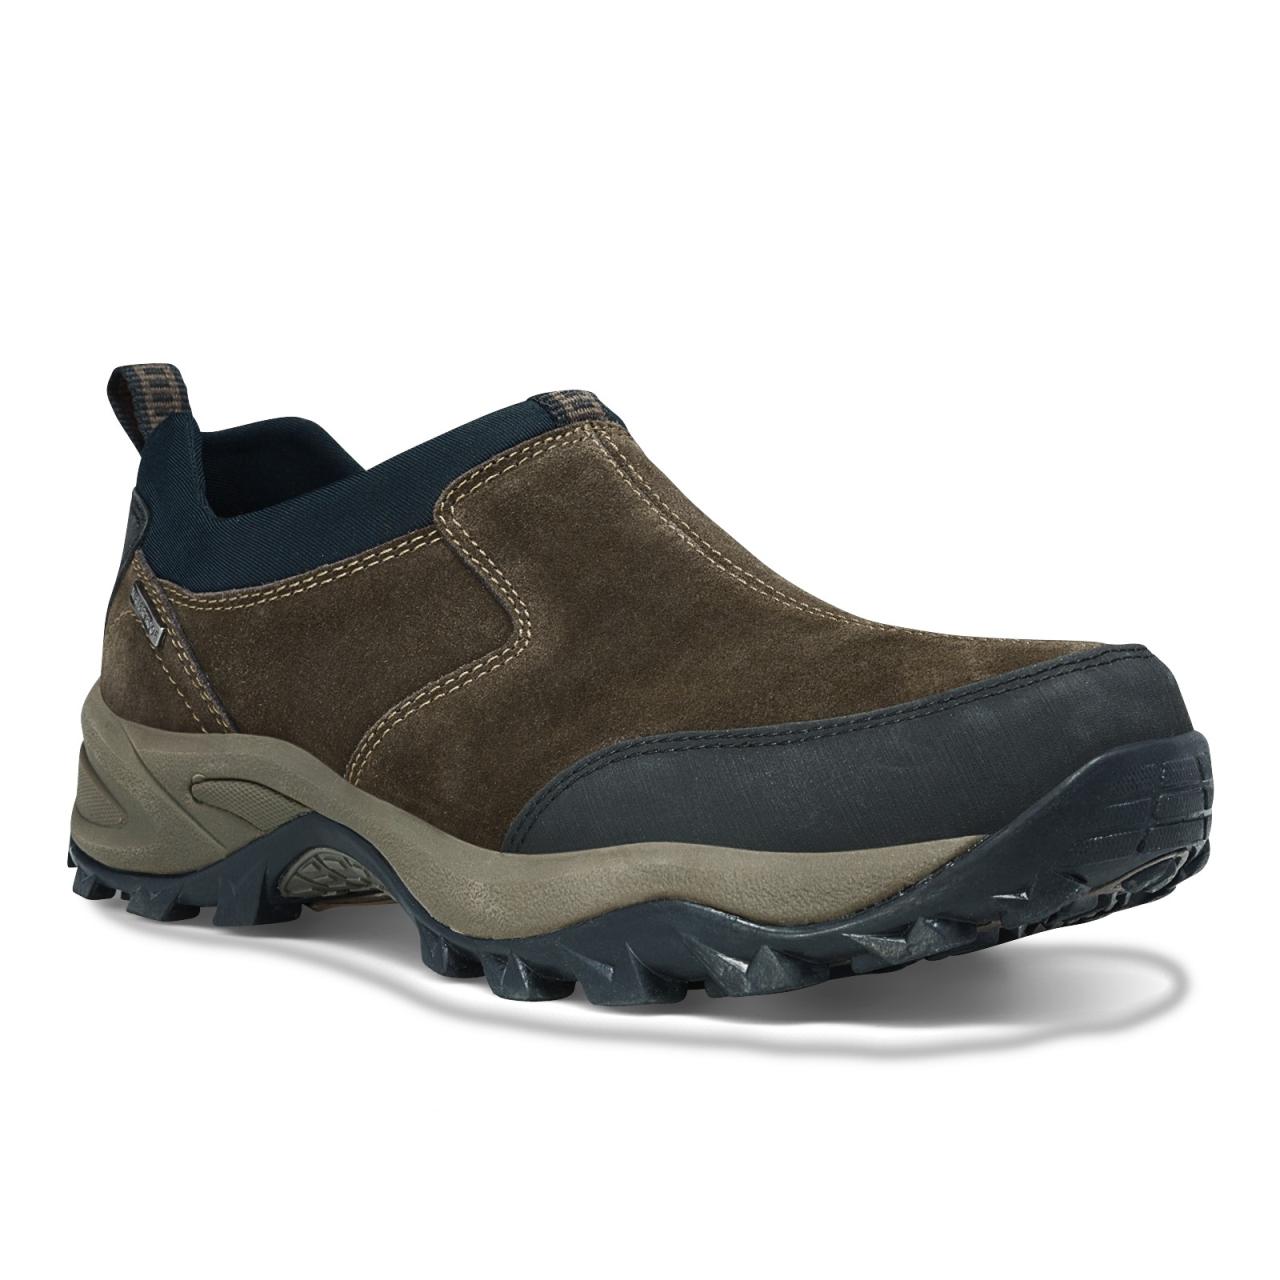 Dunham Ted - Men's Waterproof Shoes | eBay